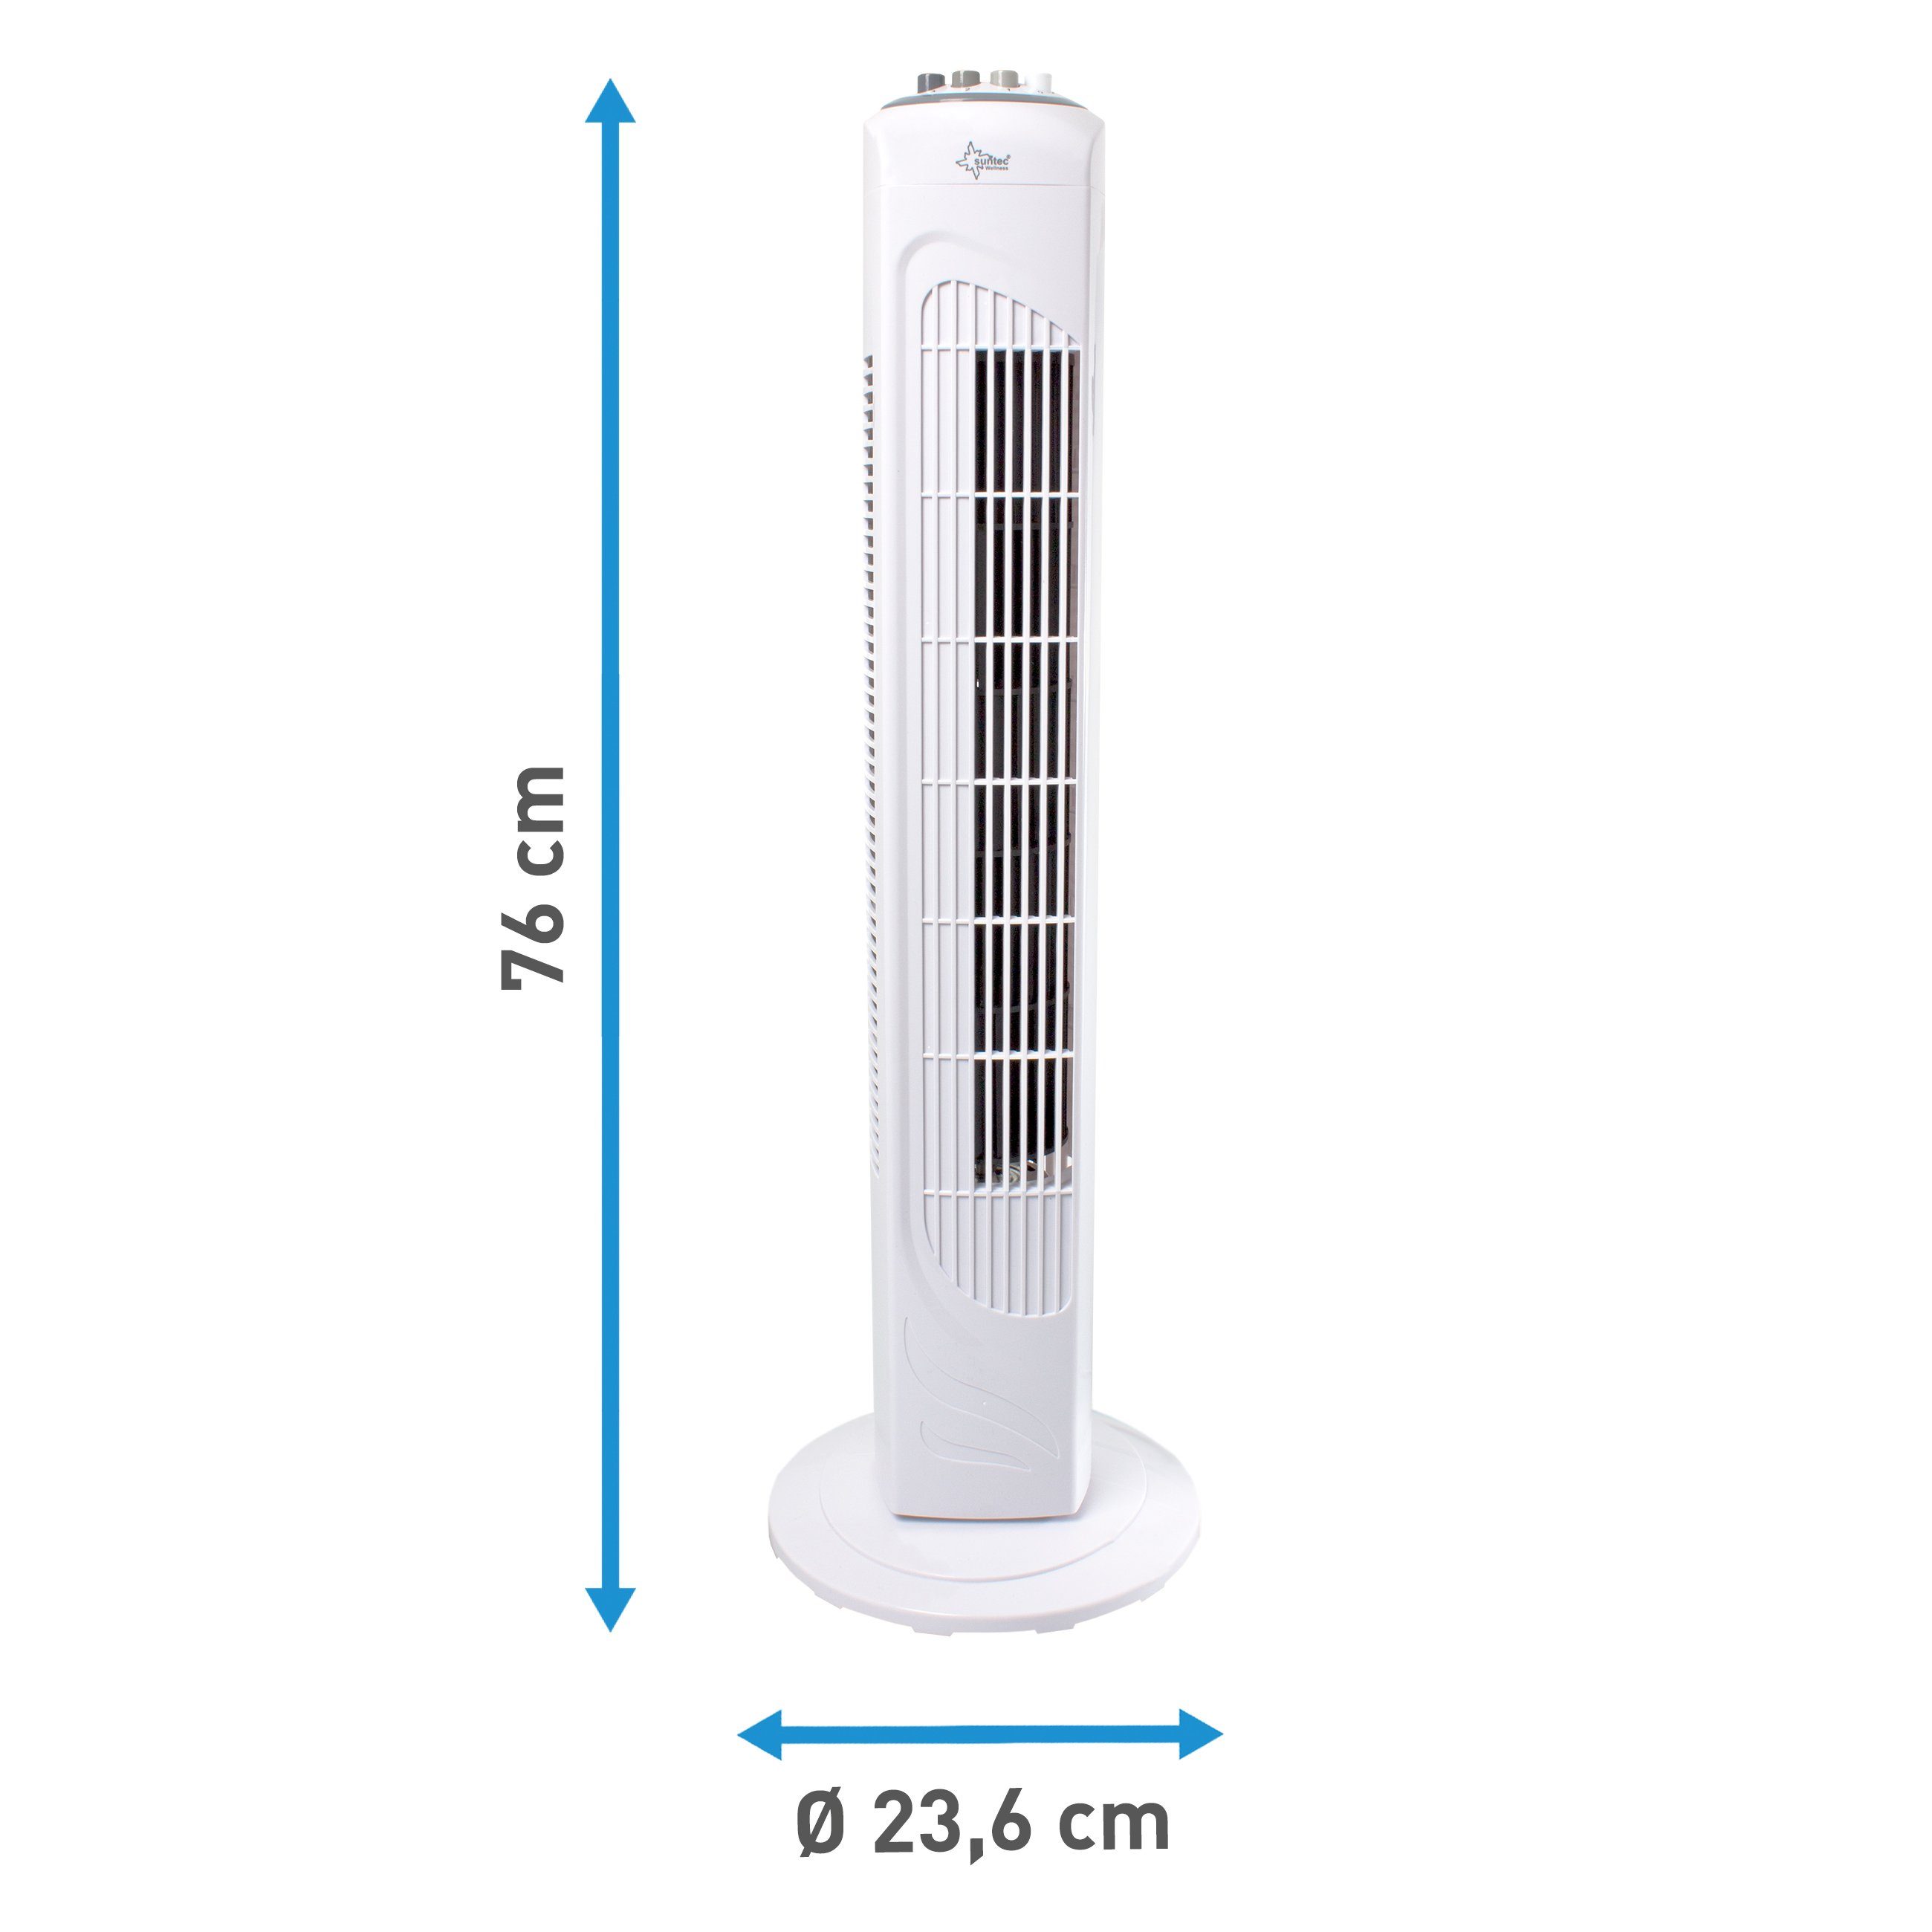 inkl. Suntec 7400 Soft-Touch-Bedienung, Wellness Fernbedienung, Fan, TV, Ventilator Watt CoolBreeze Turmventilator 45